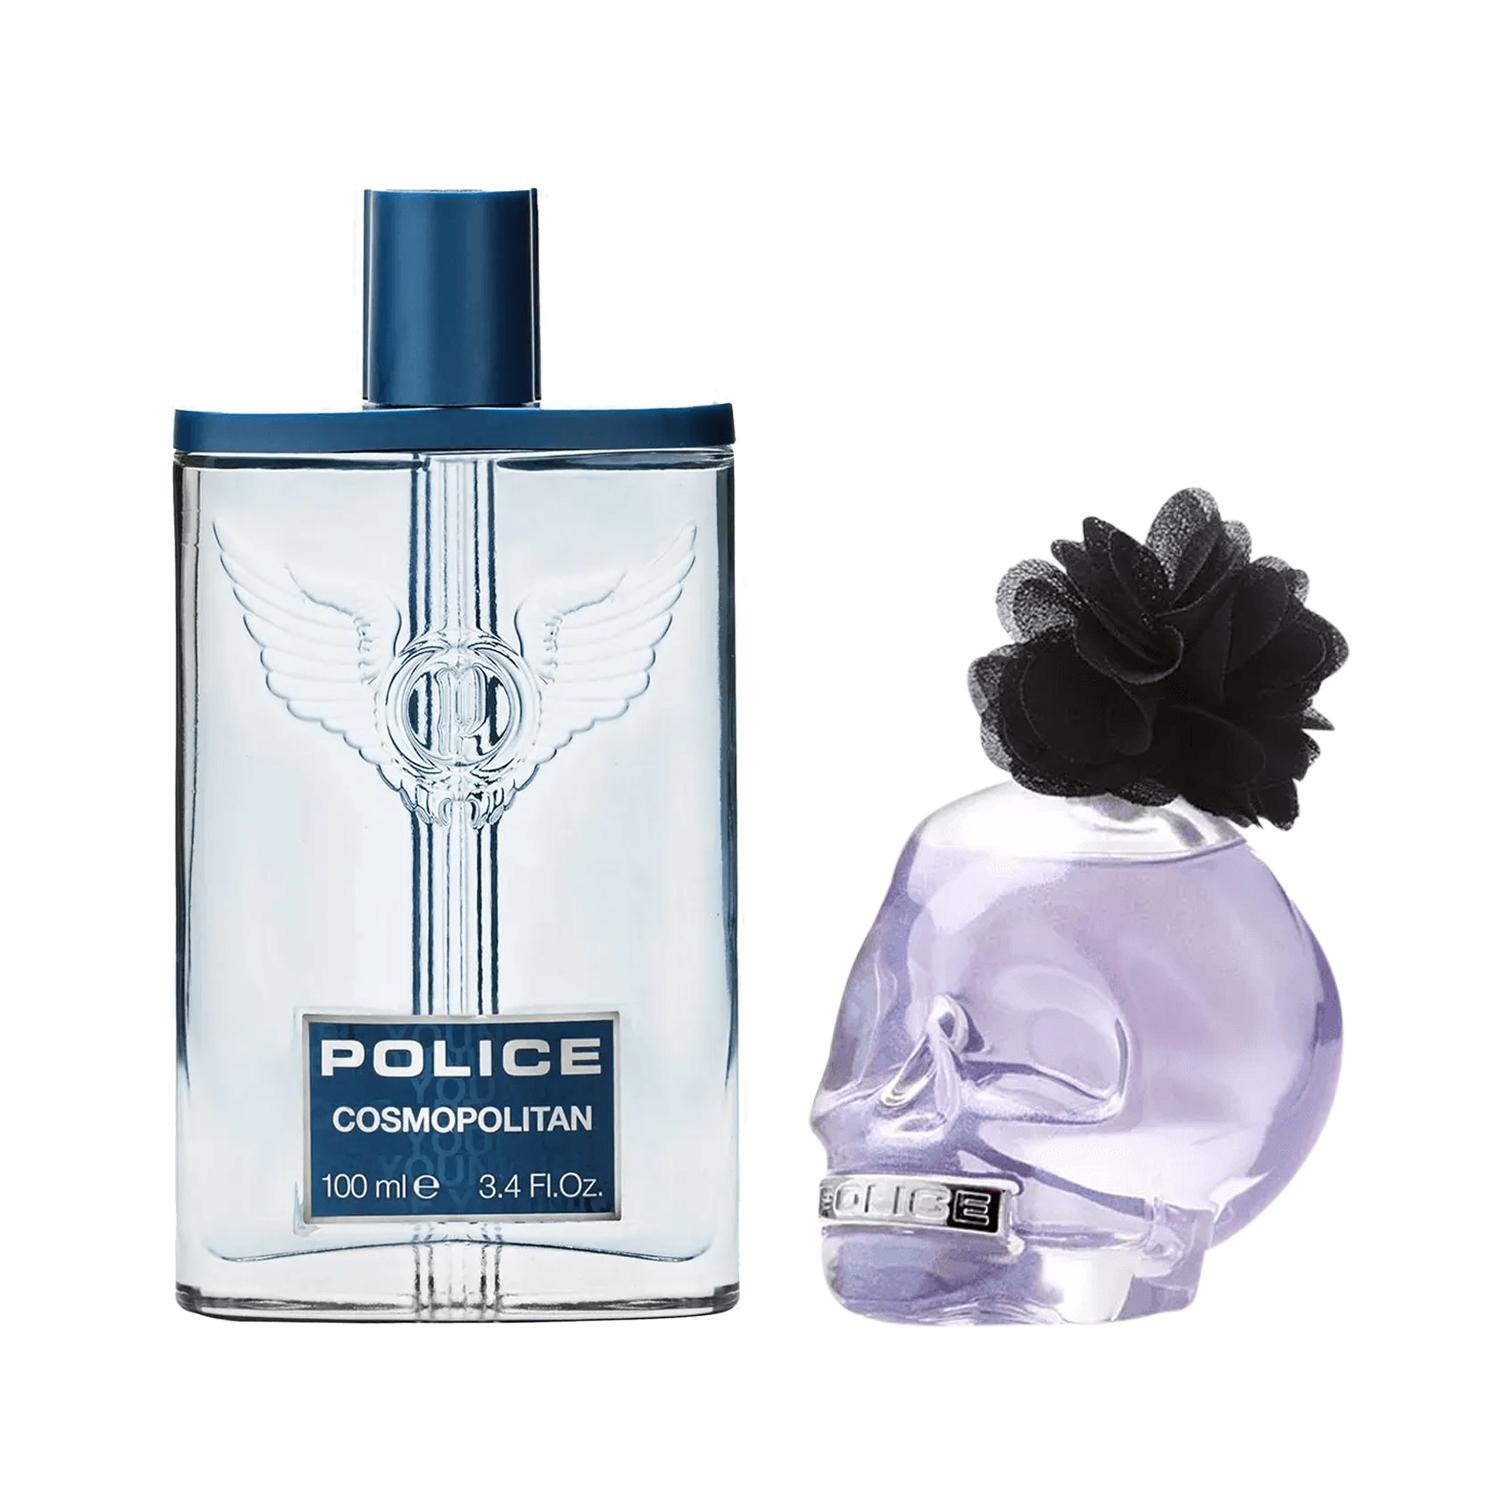 Police Cosmopolitan + To Be Rose Combo